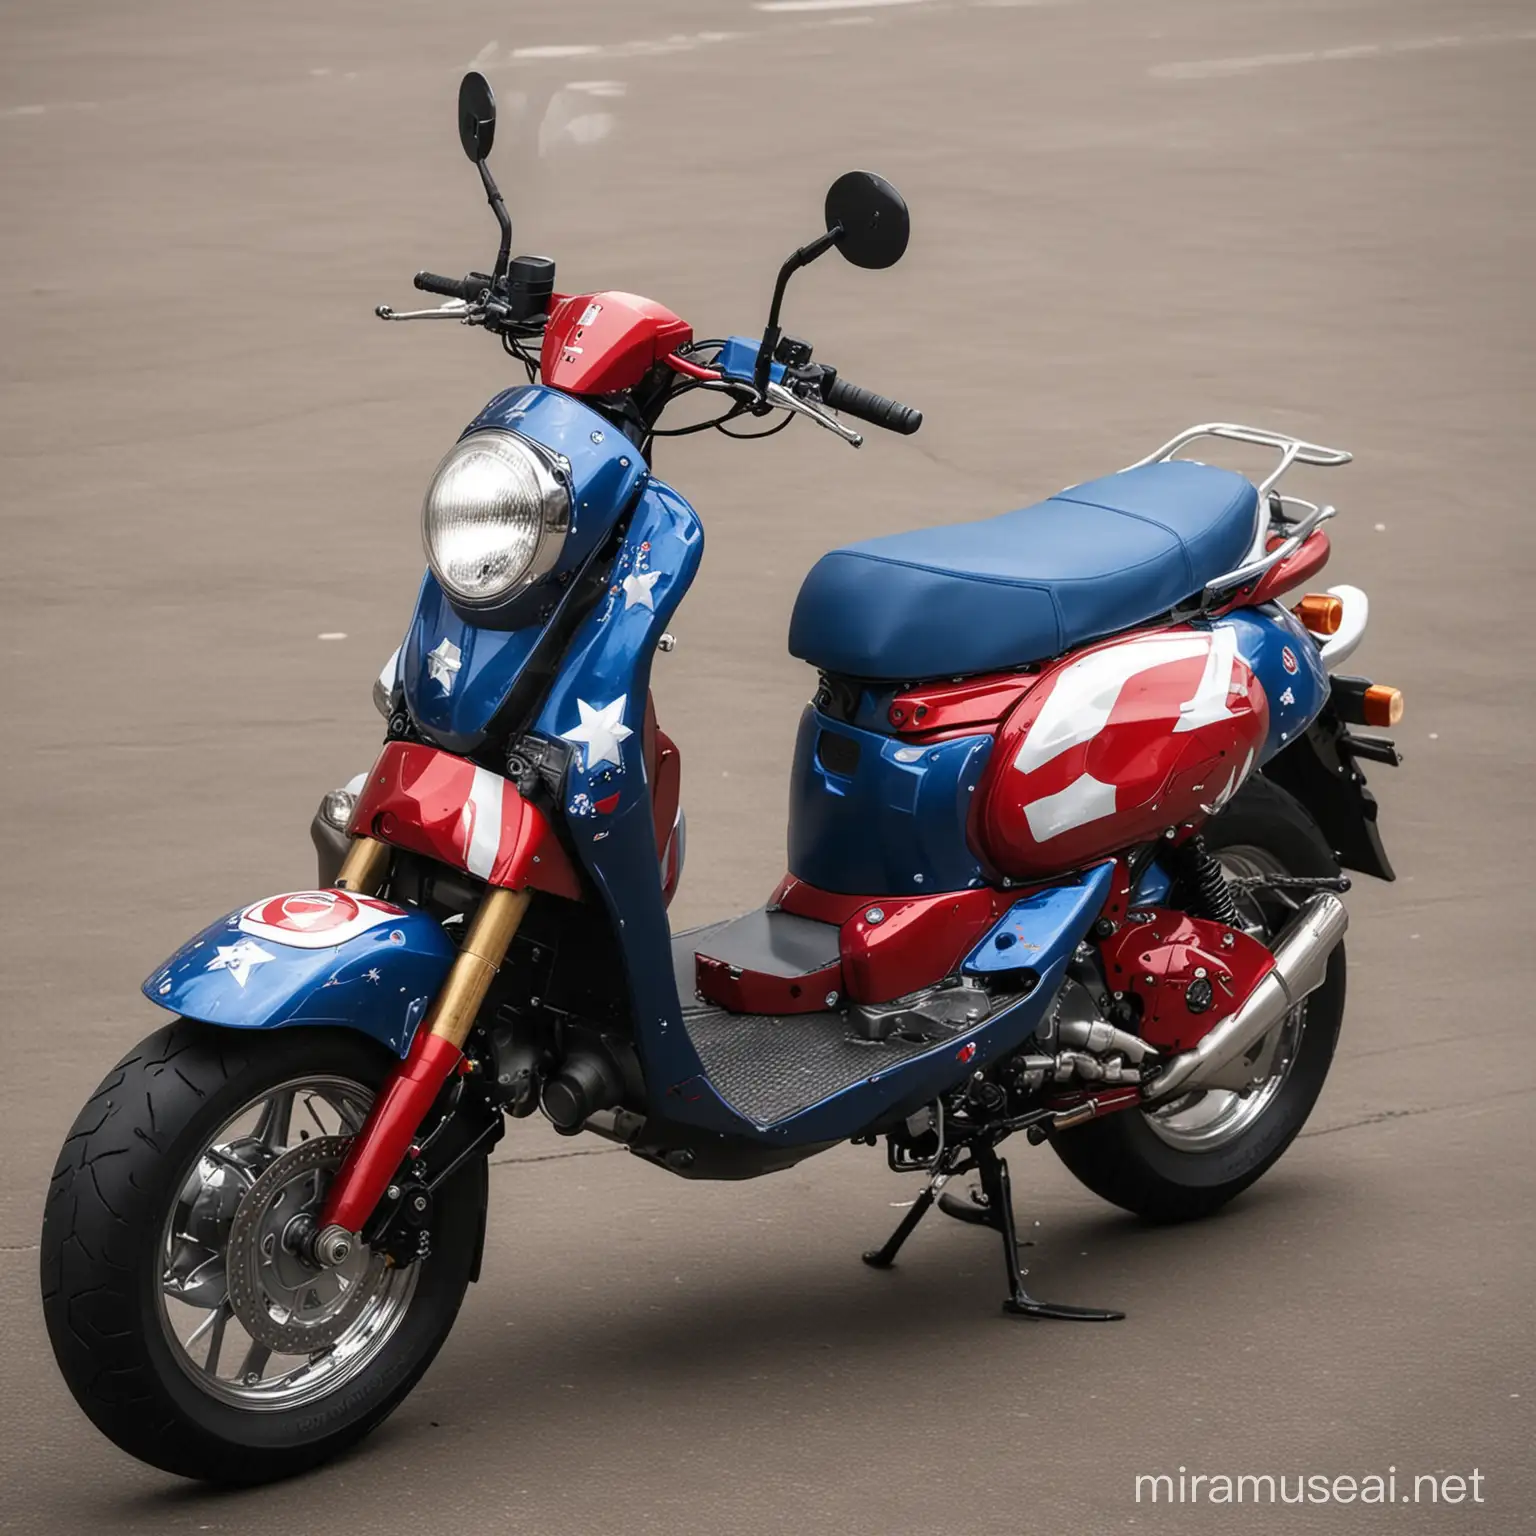 Captain America Style Honda Scoopy Custom Motorcycle Inspired by Marvel Superhero